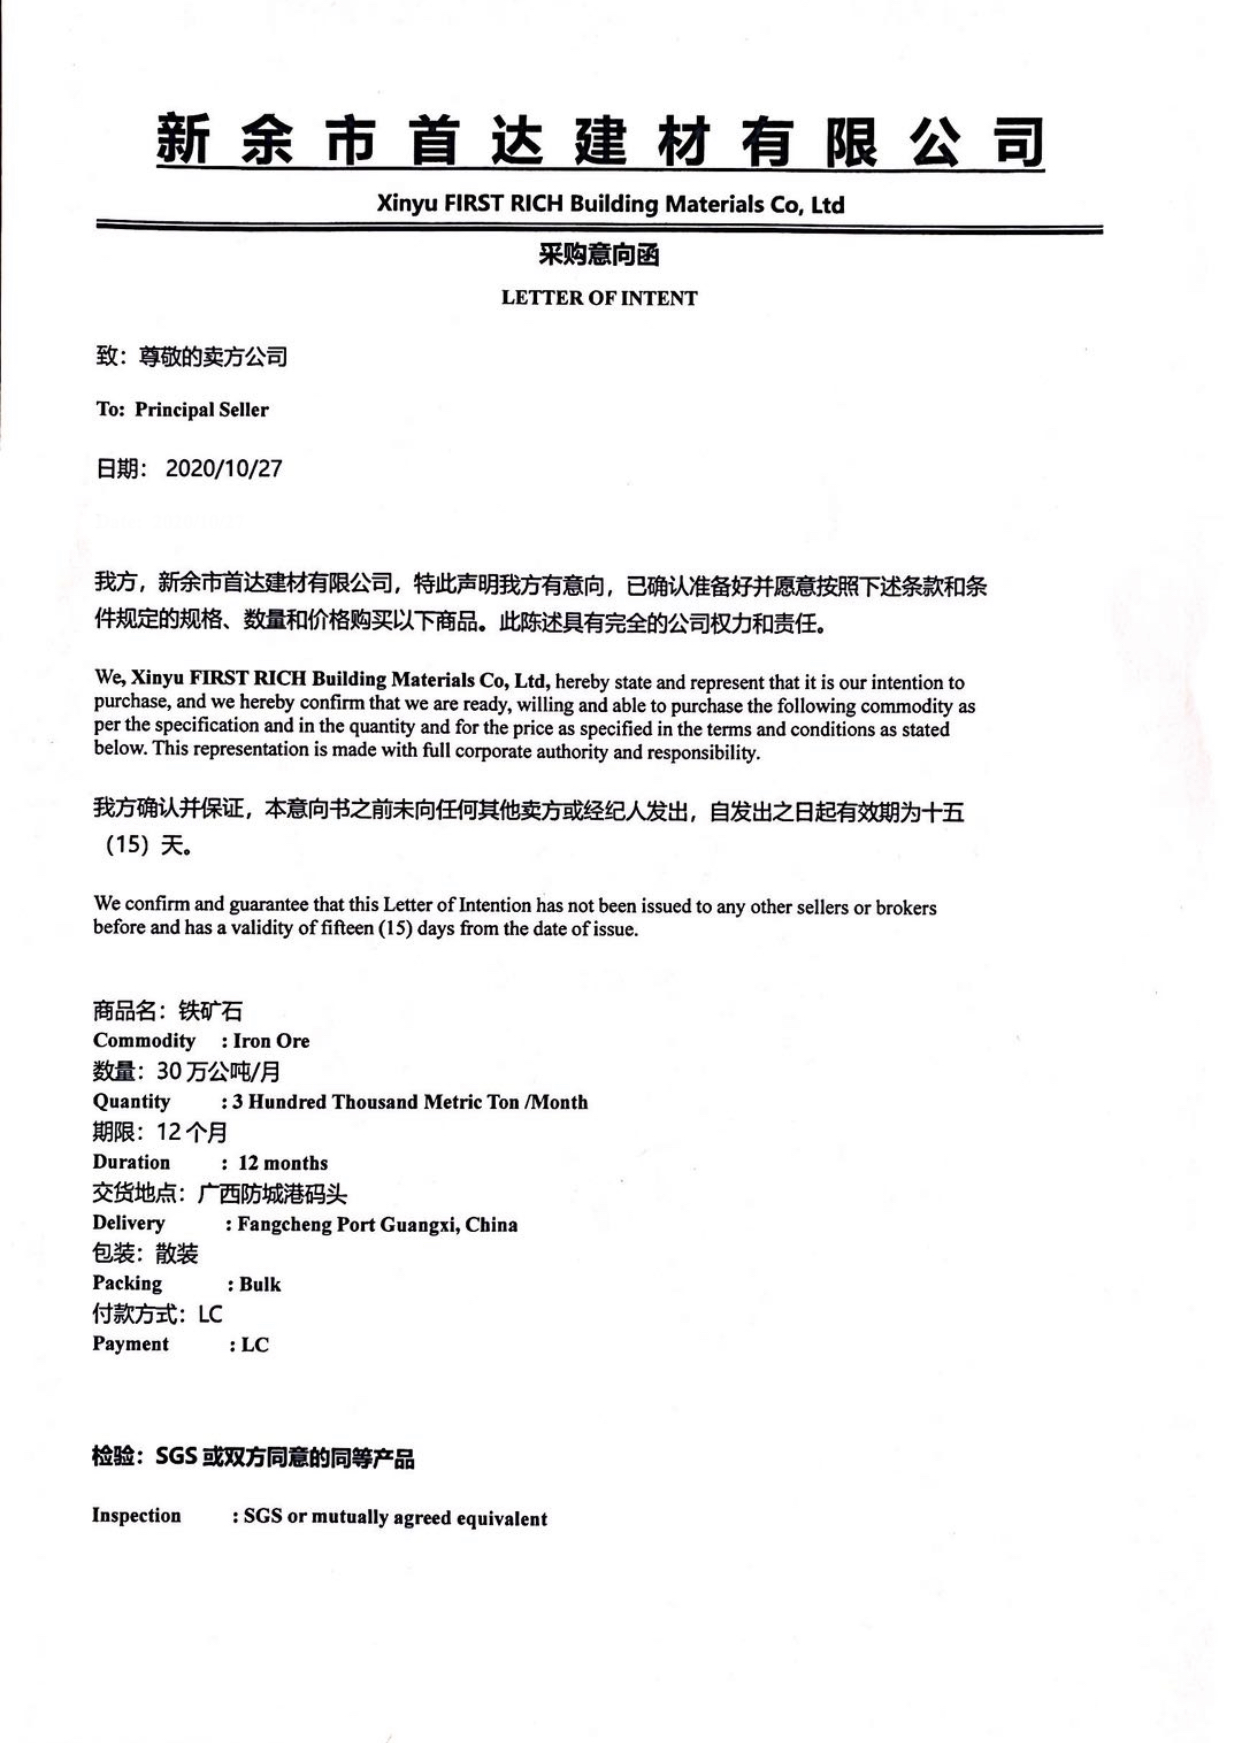 LOI: Iron Ore 65% CIF FangCheng, China for XinYu First Rich Building Materials